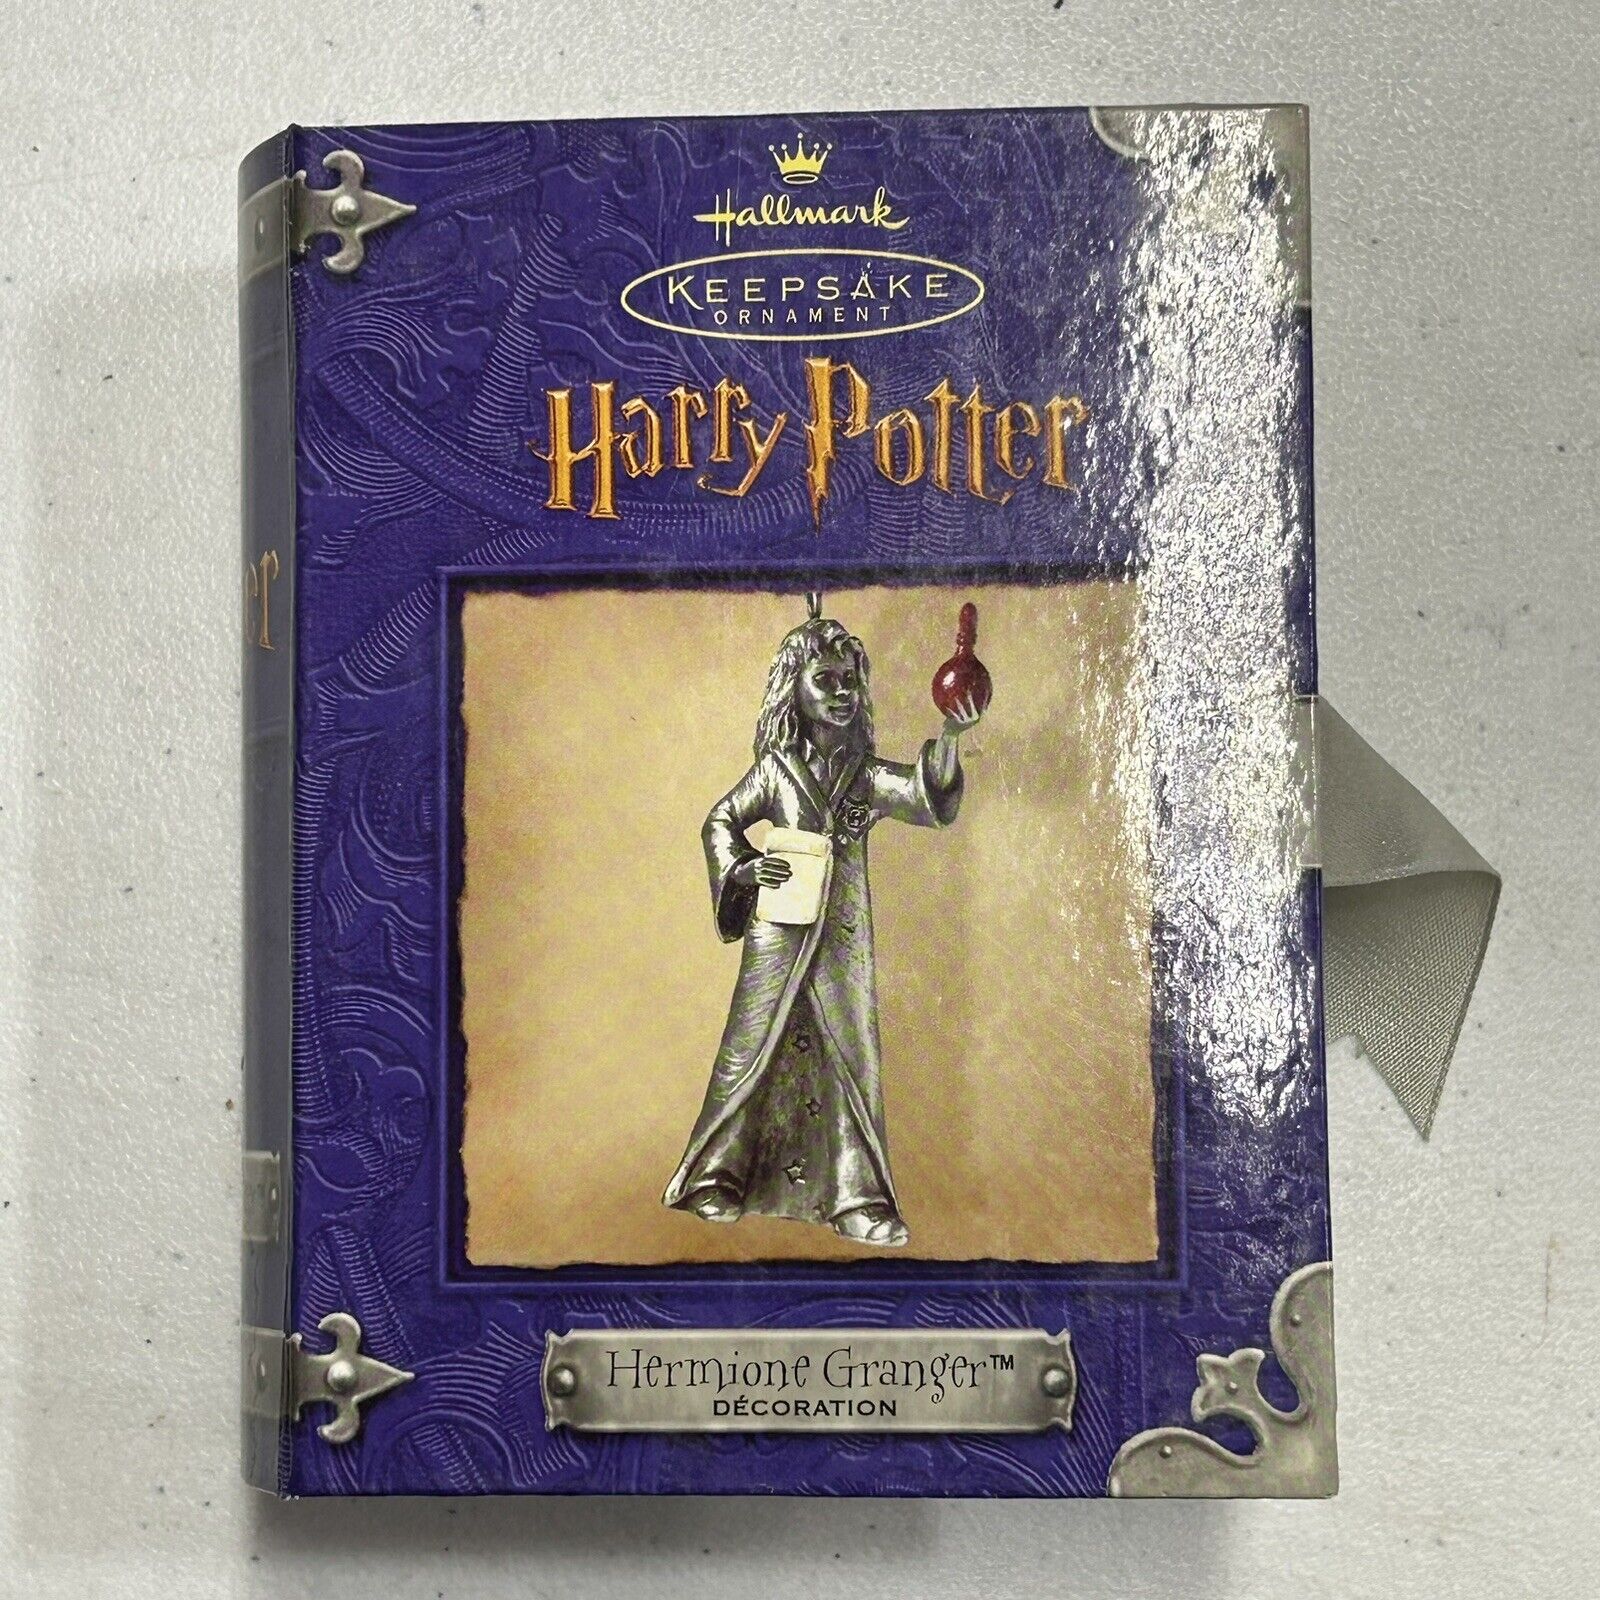 2001 Hallmark Keepsake Ornament Harry Potter Hermione Granger Pewter Red Potion